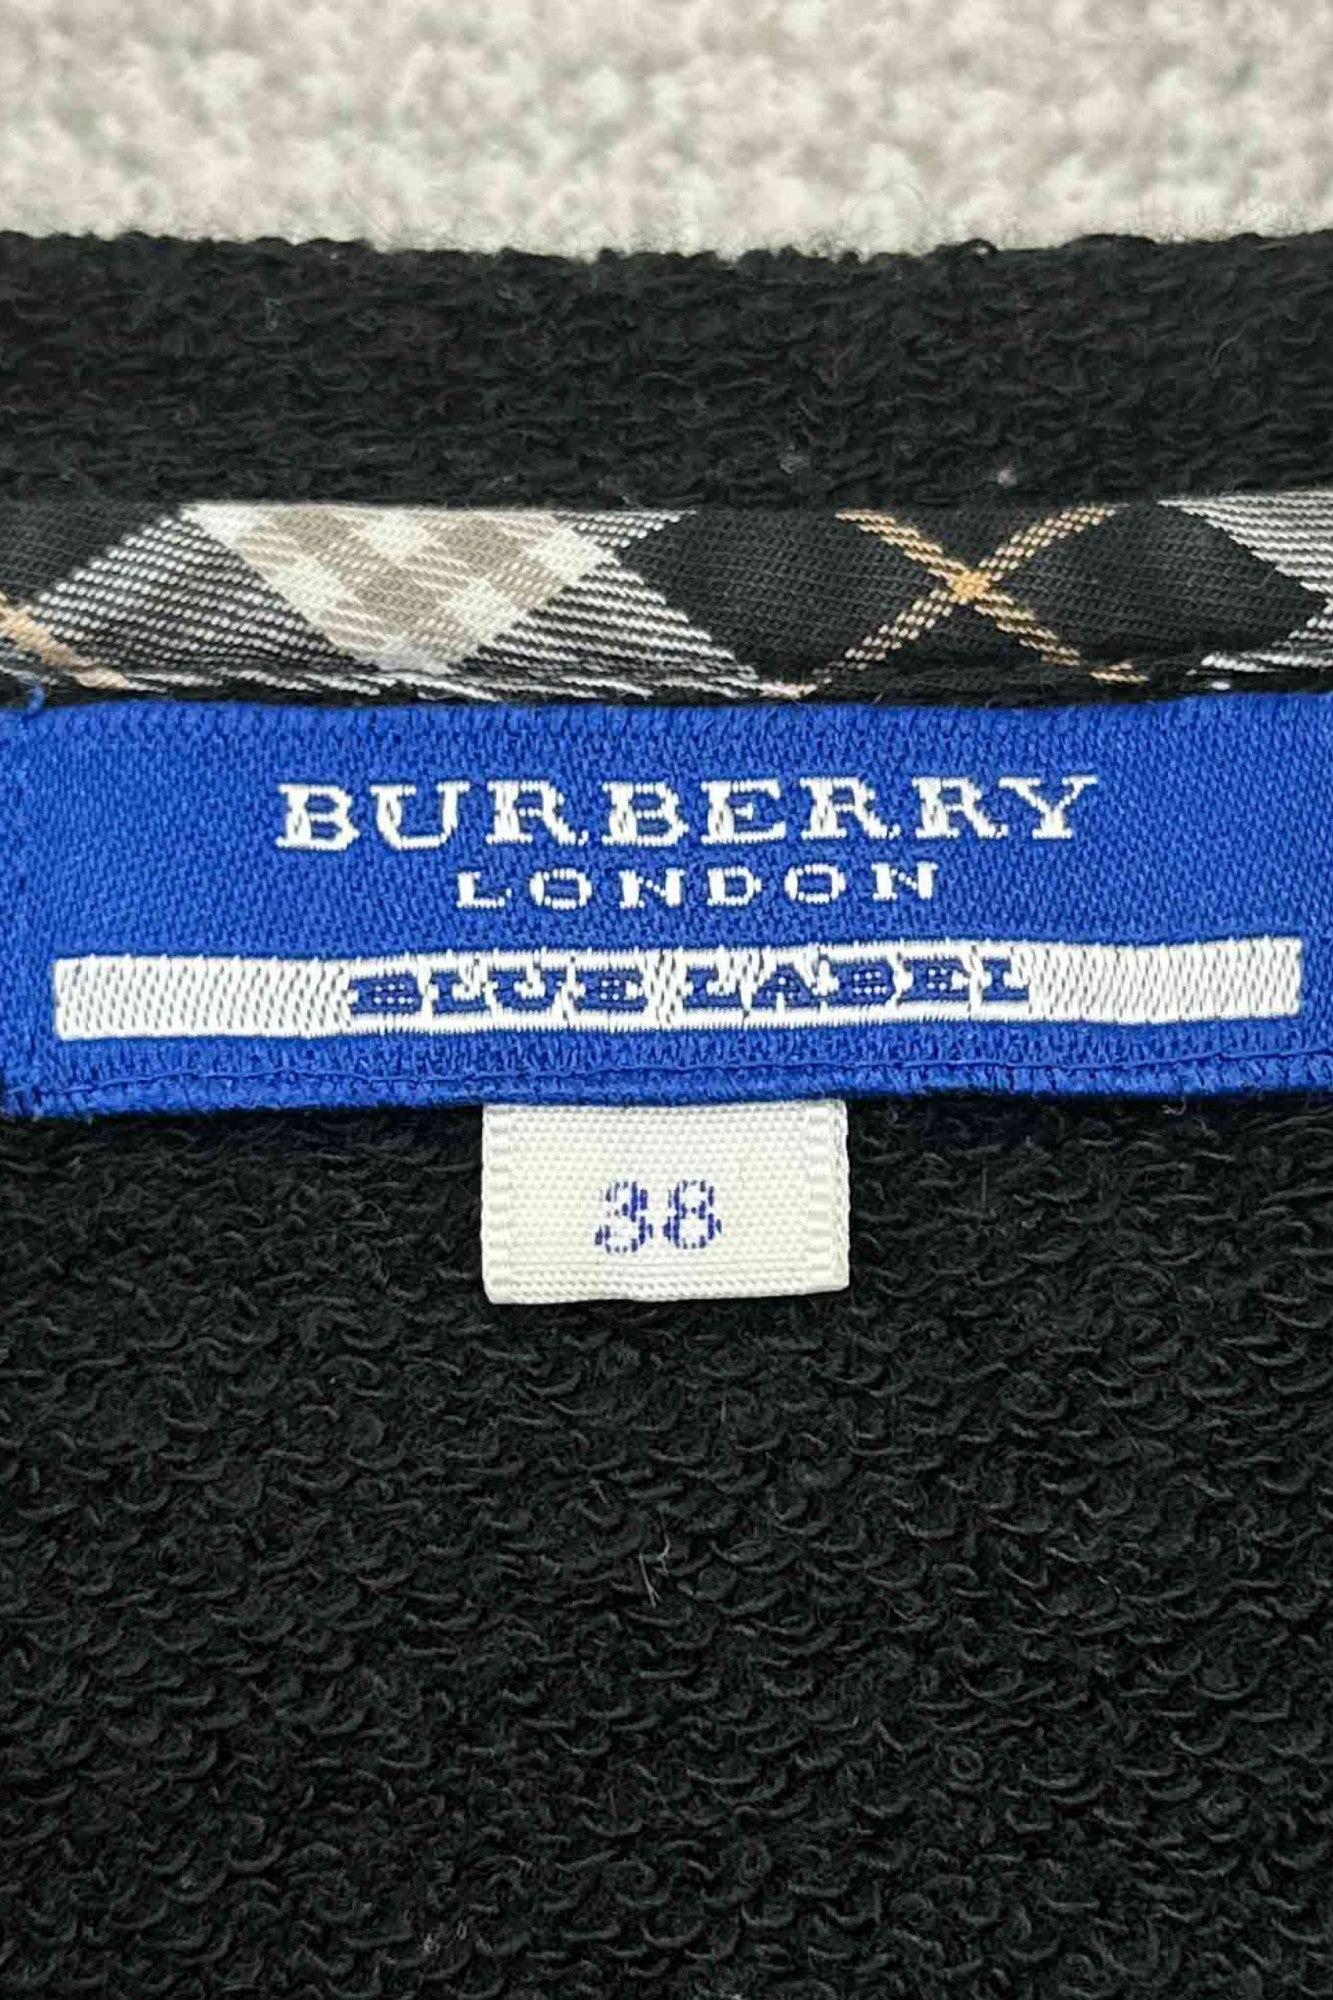 BURBERRY LONDON BLUE LABEL hoodie